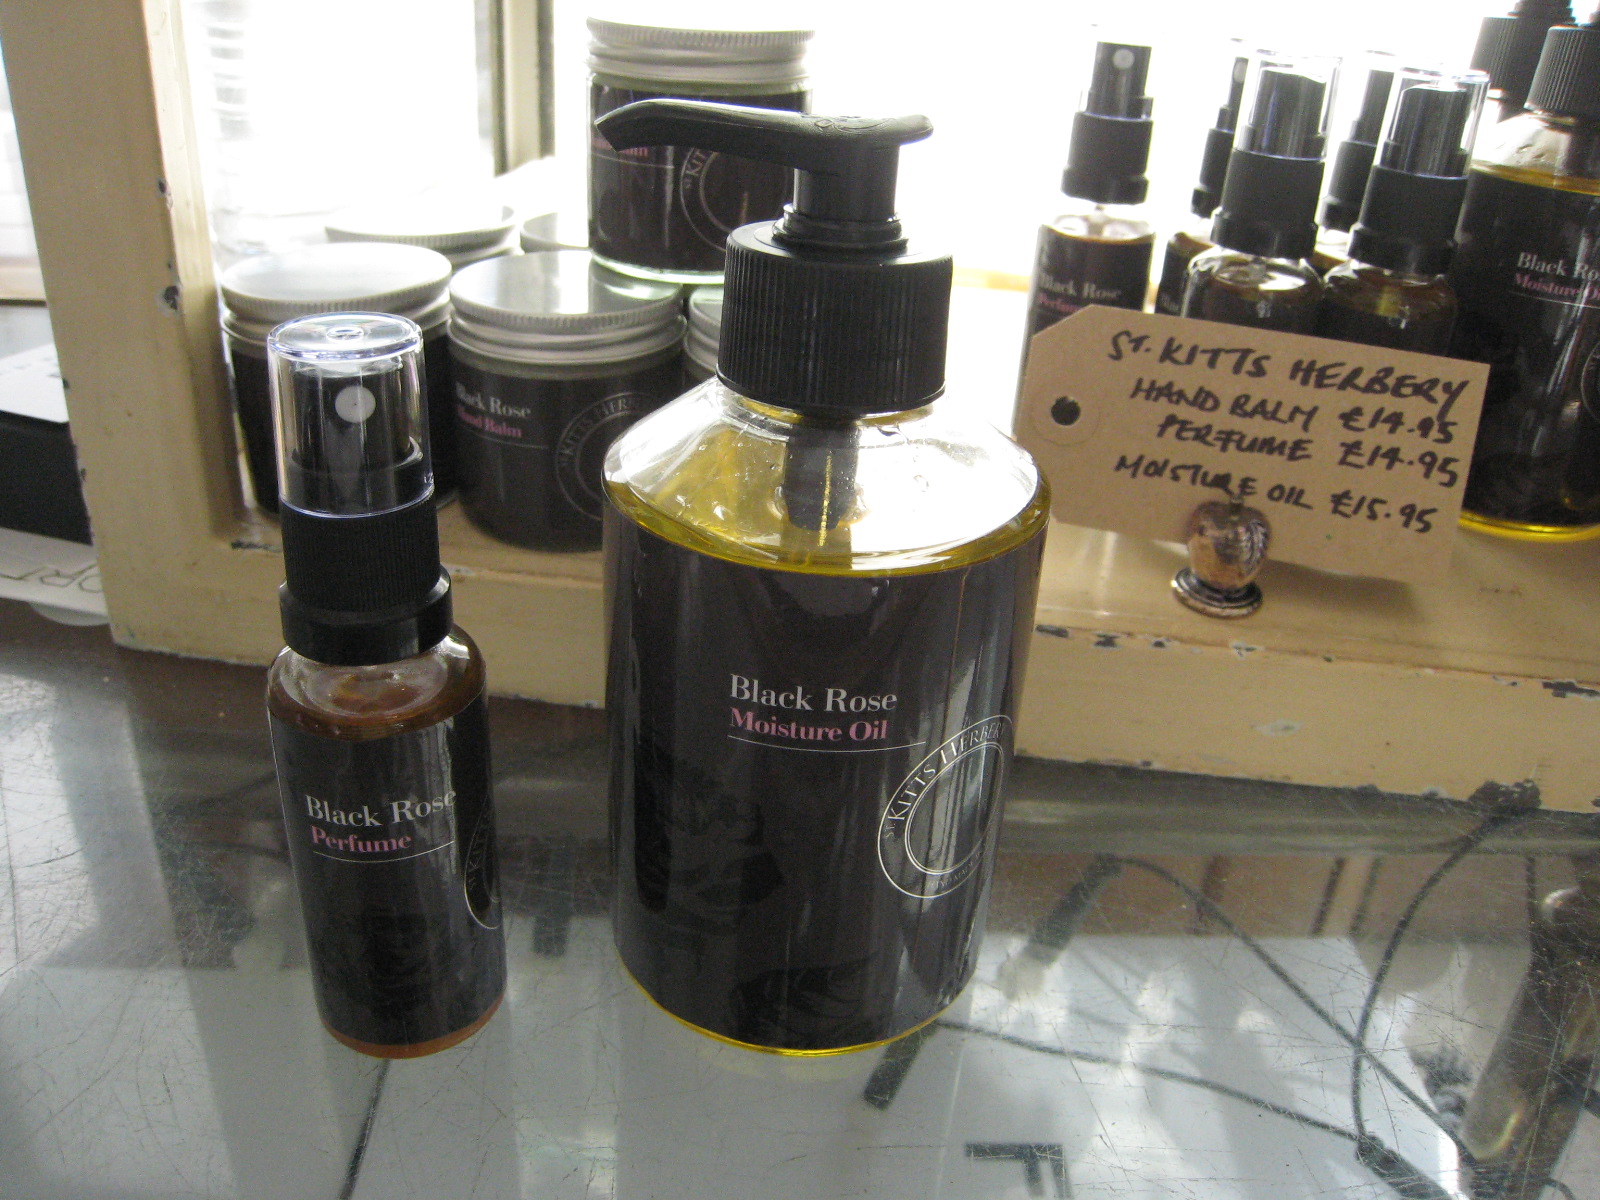 st kitts herbery perfume moisture oil bath stockist 